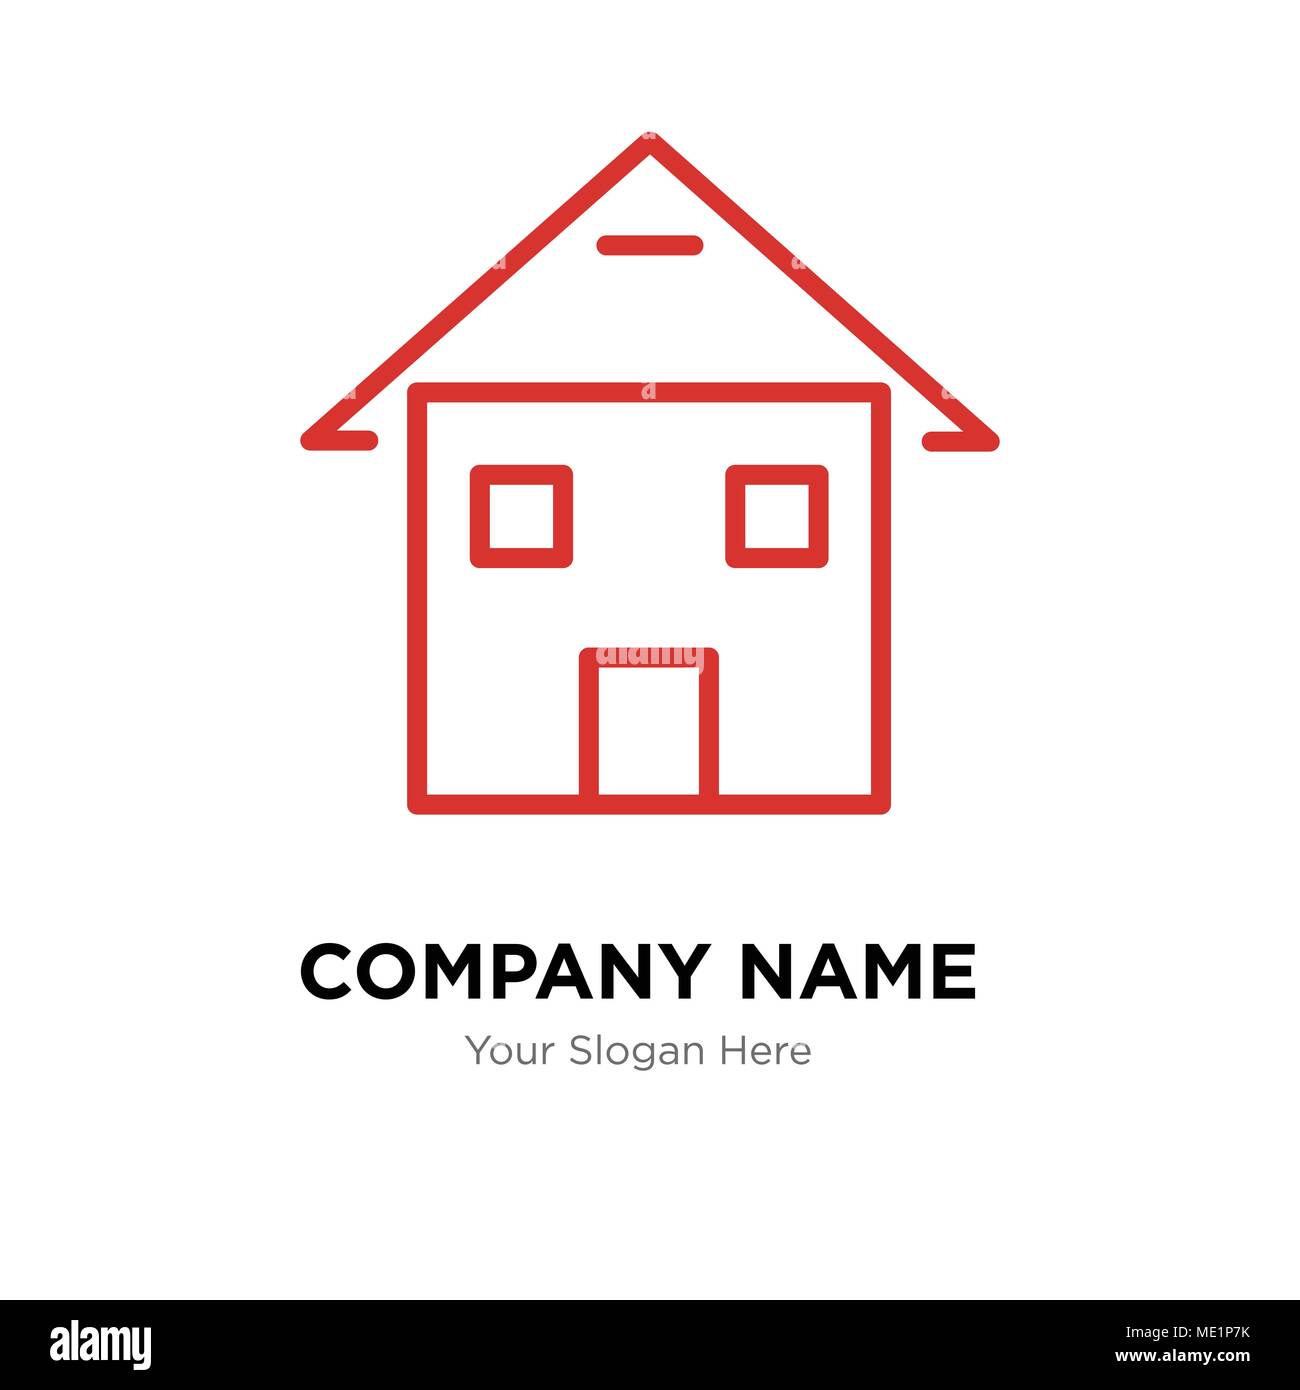 Homepage company logo design template, Business corporate vector icon ...